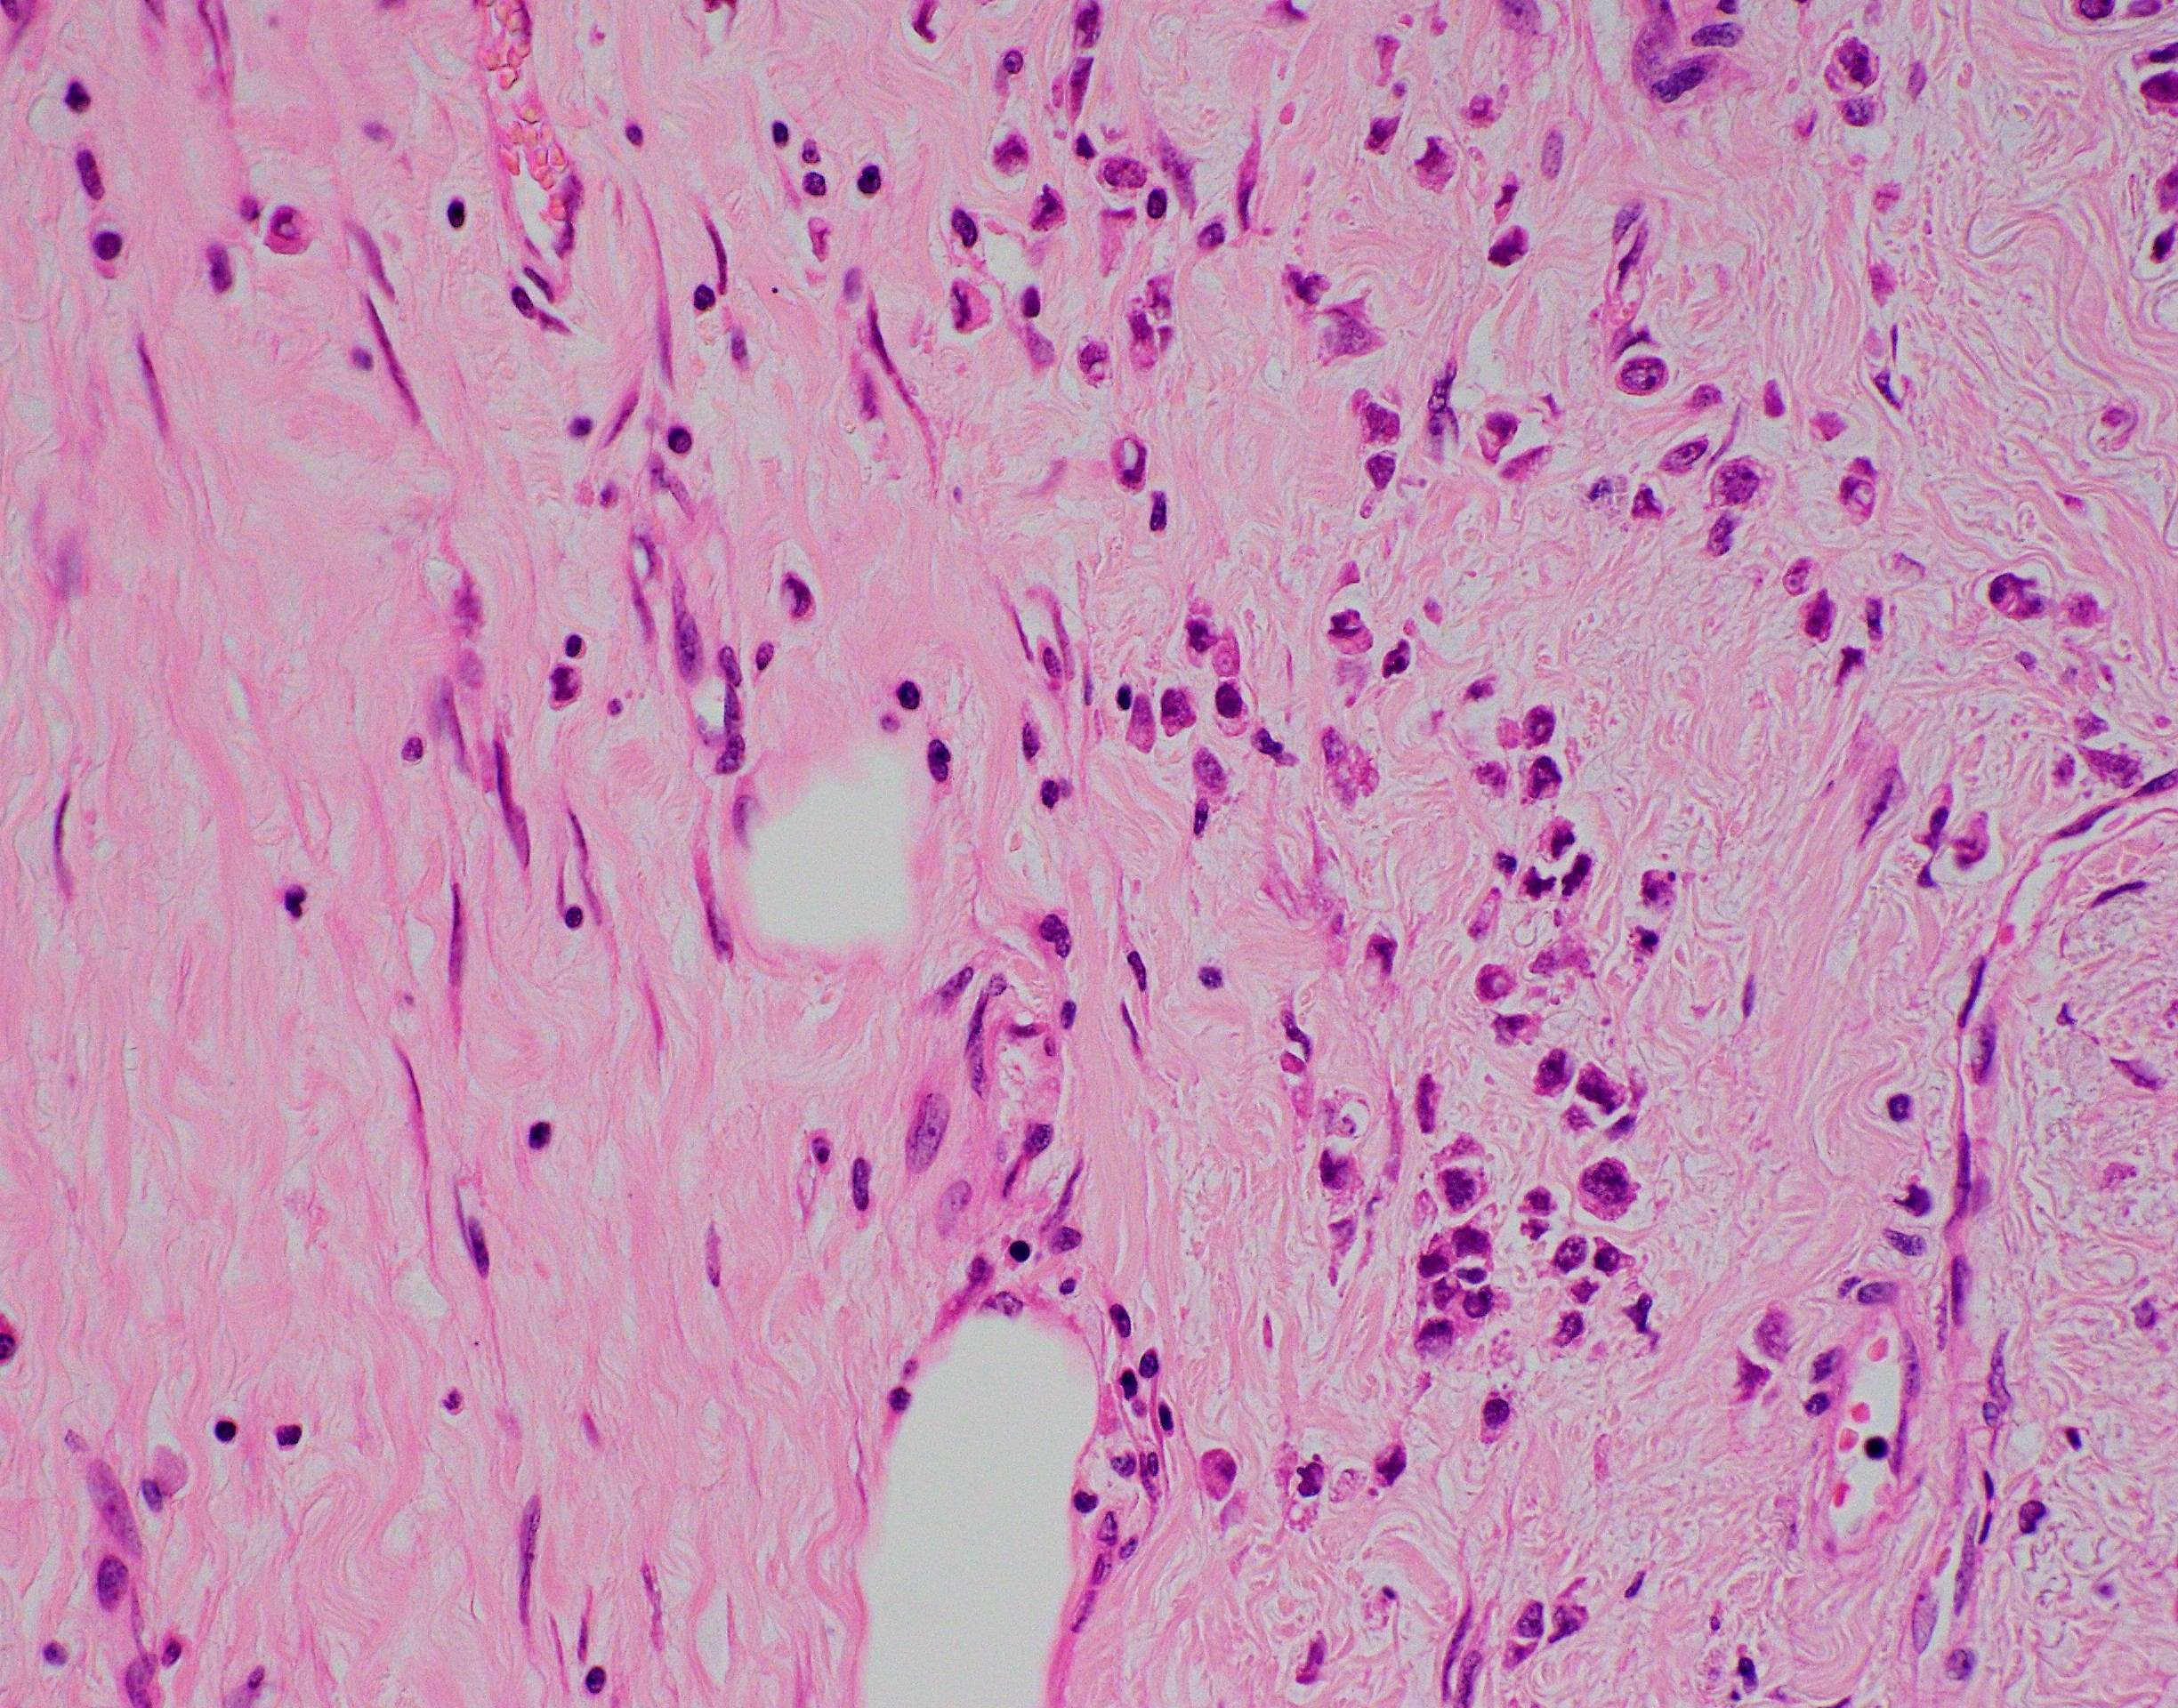 S11 2745 invasive lobular carcinoma 40x